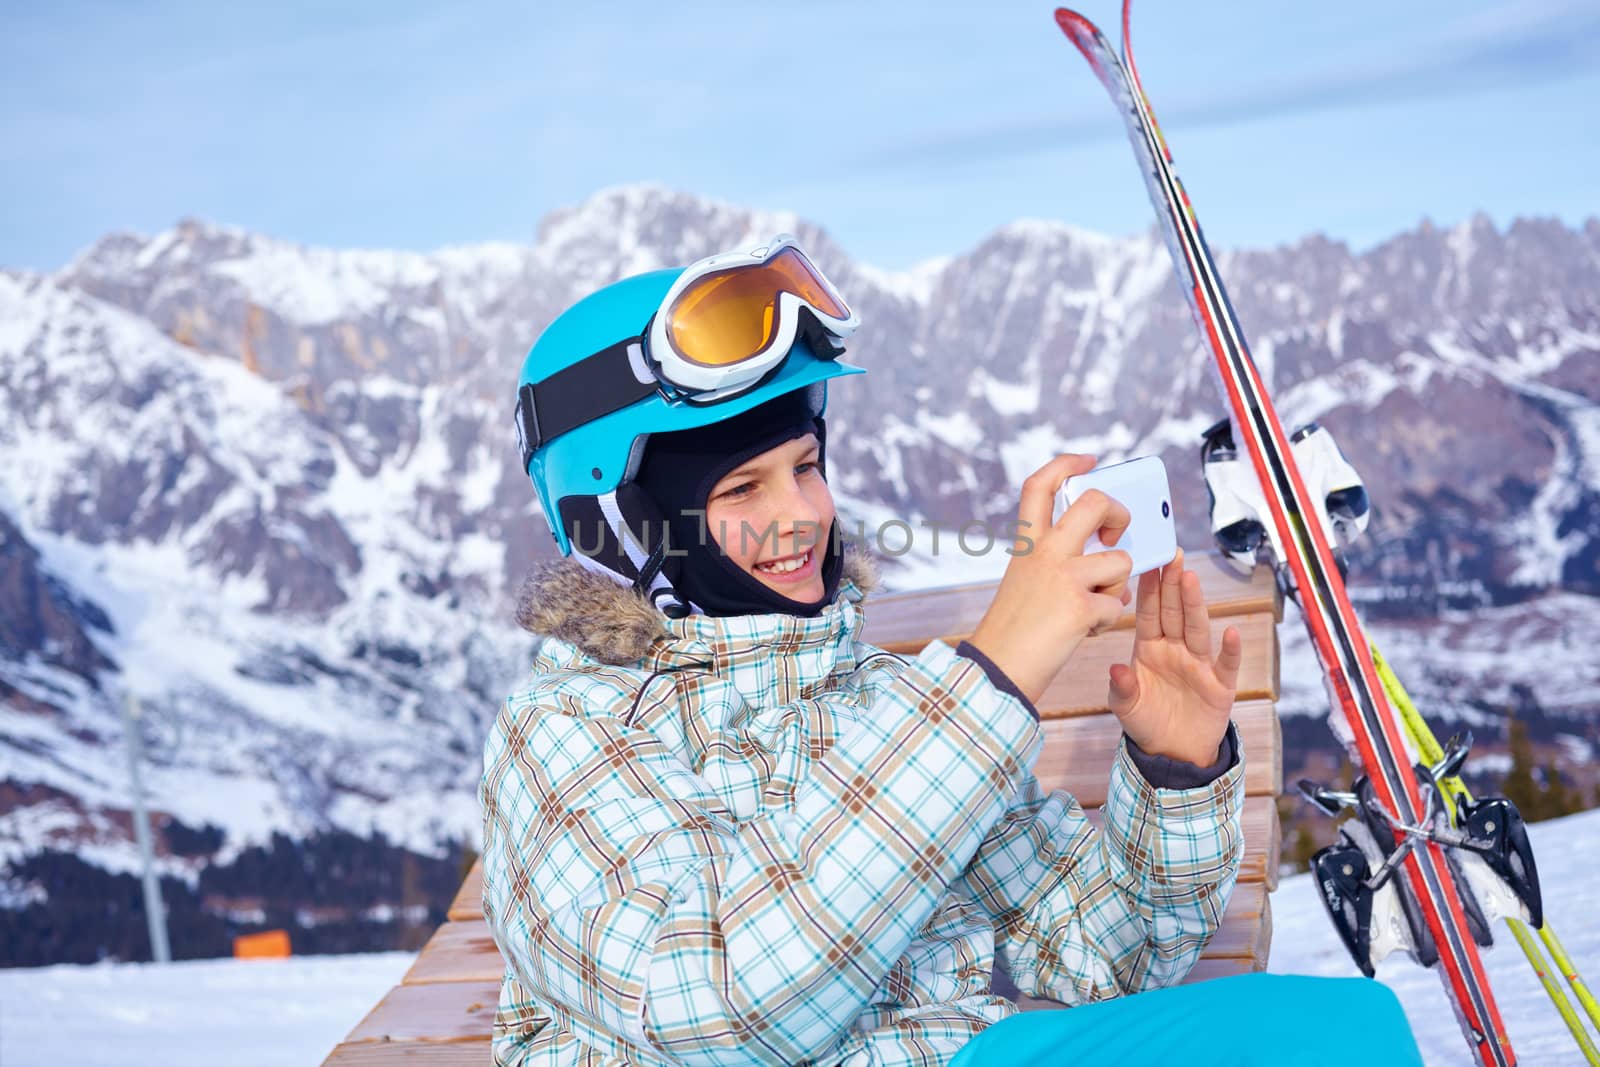 Ski, skier, winter - lovely girl photographed mountains